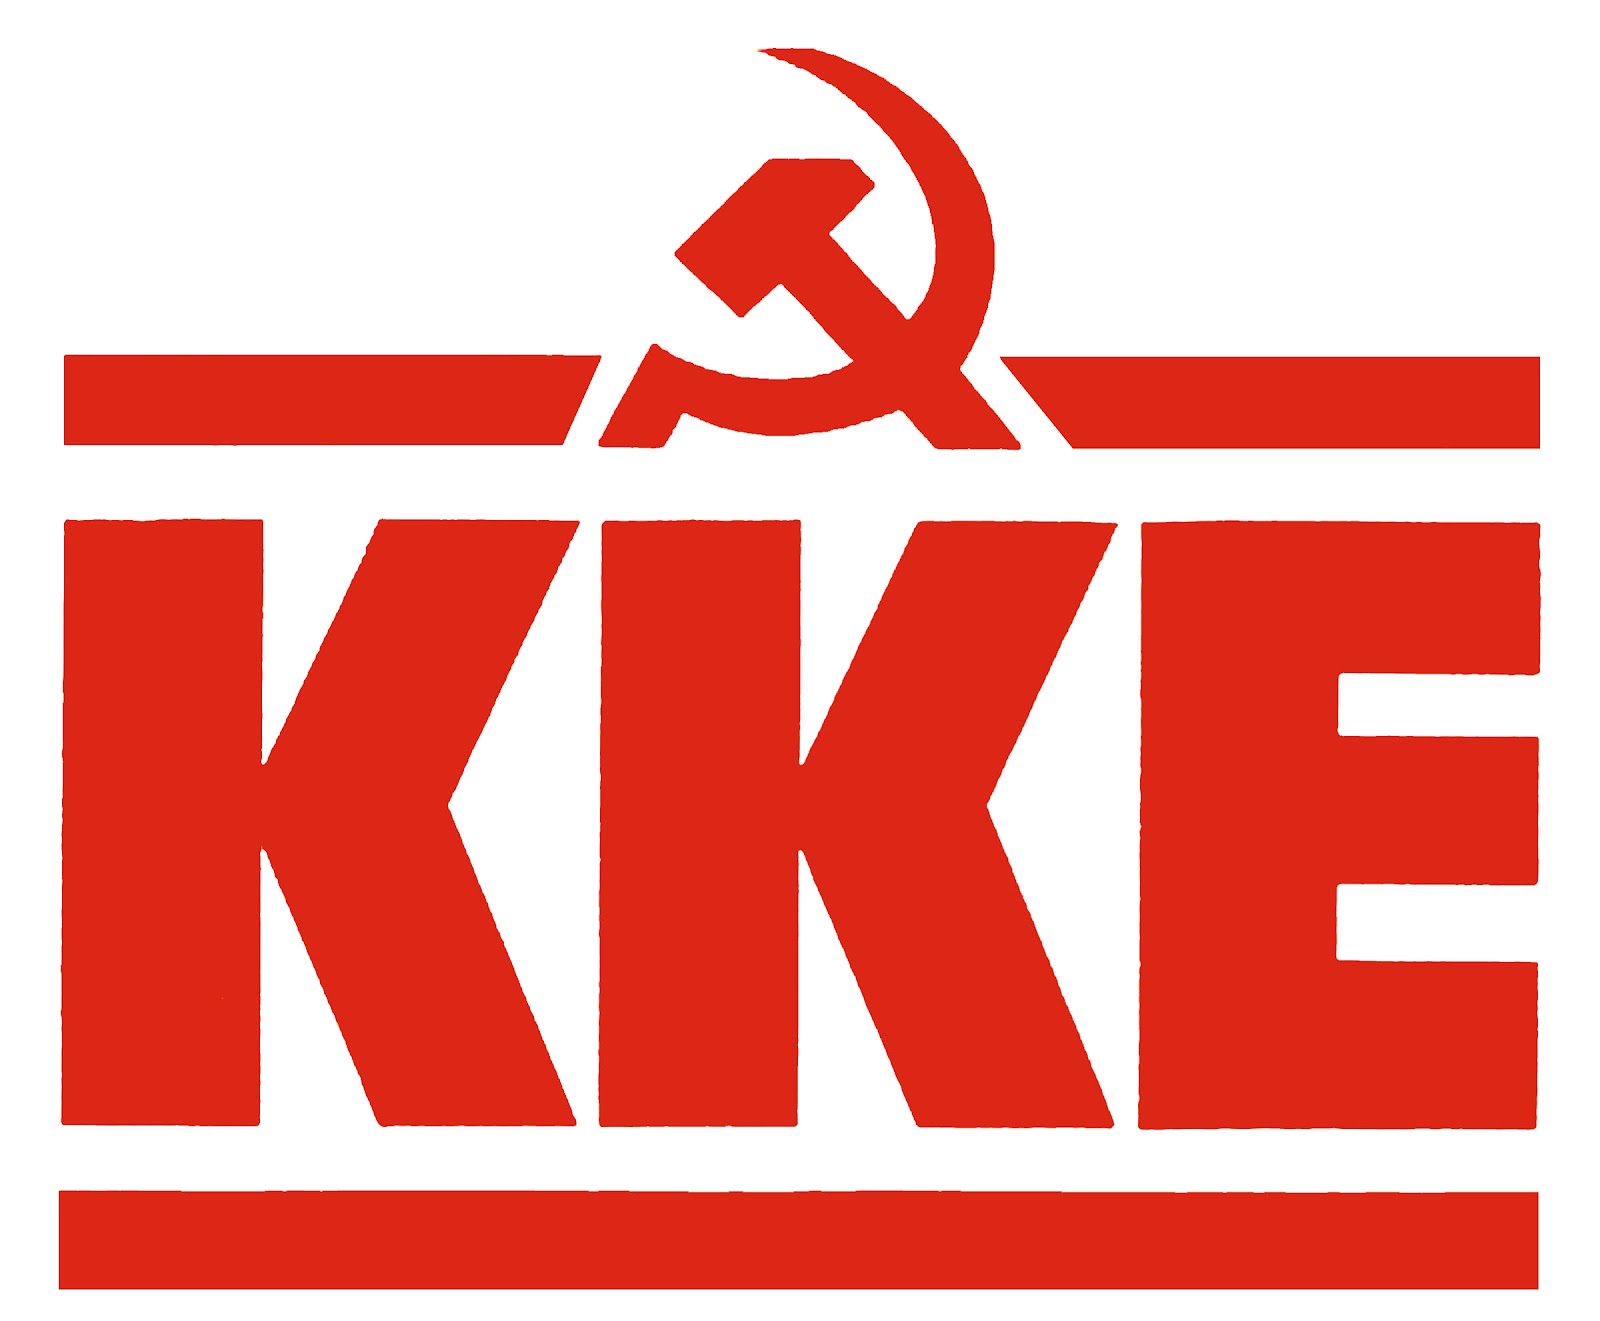 KKE: Ακέραια η ευθύνη της κυβέρνησης για την αναβολή προγραμματισμένων εμβολιασμών σε νοσοκομεία